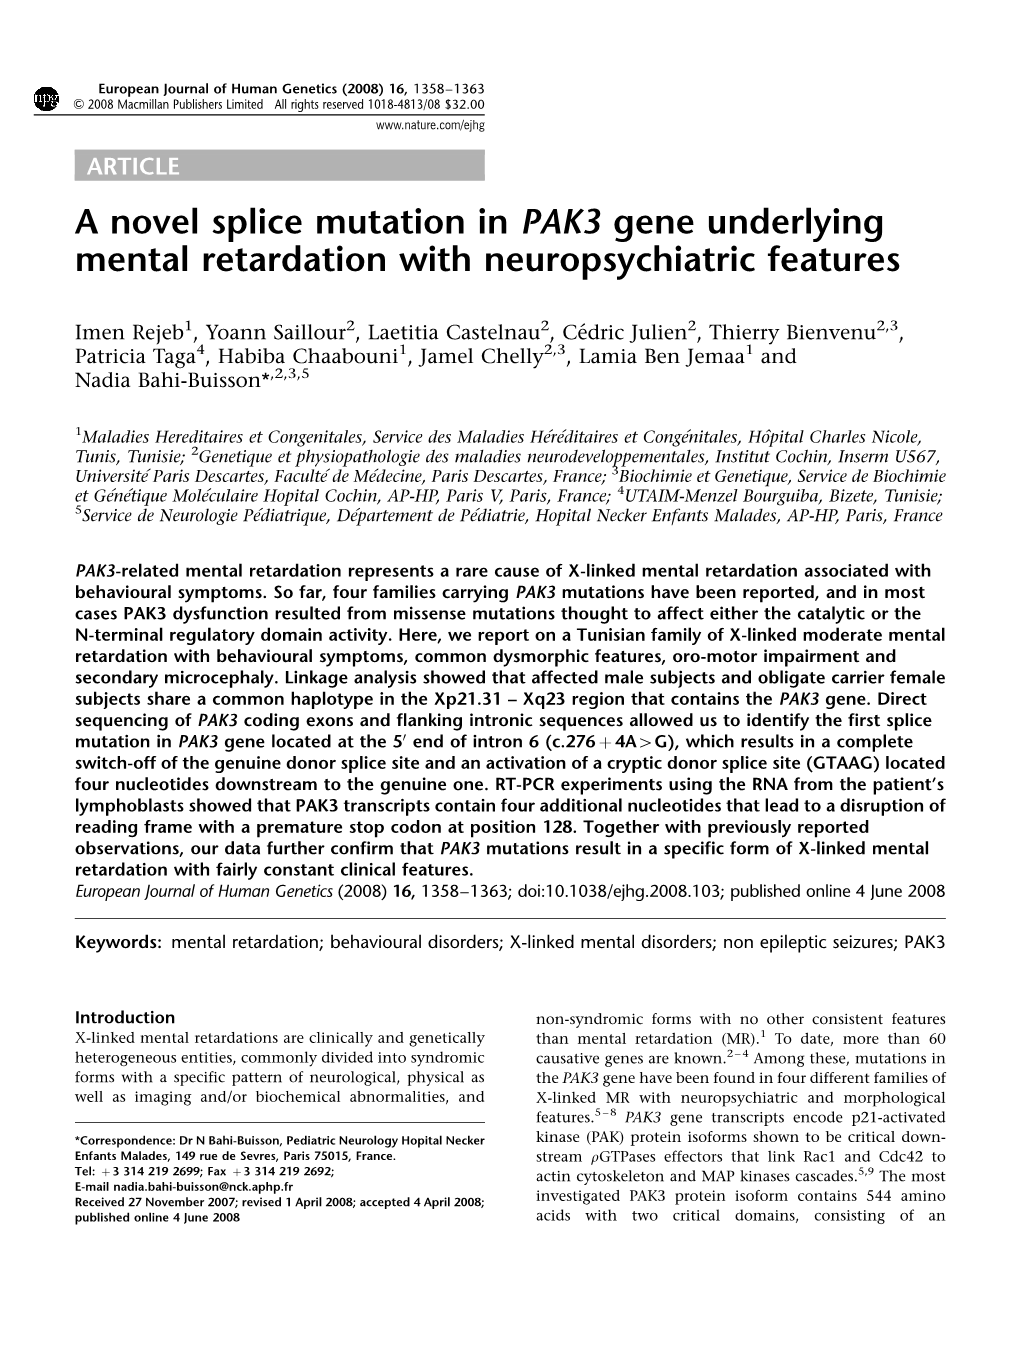 A Novel Splice Mutation in PAK3 Gene Underlying Mental Retardation with Neuropsychiatric Features